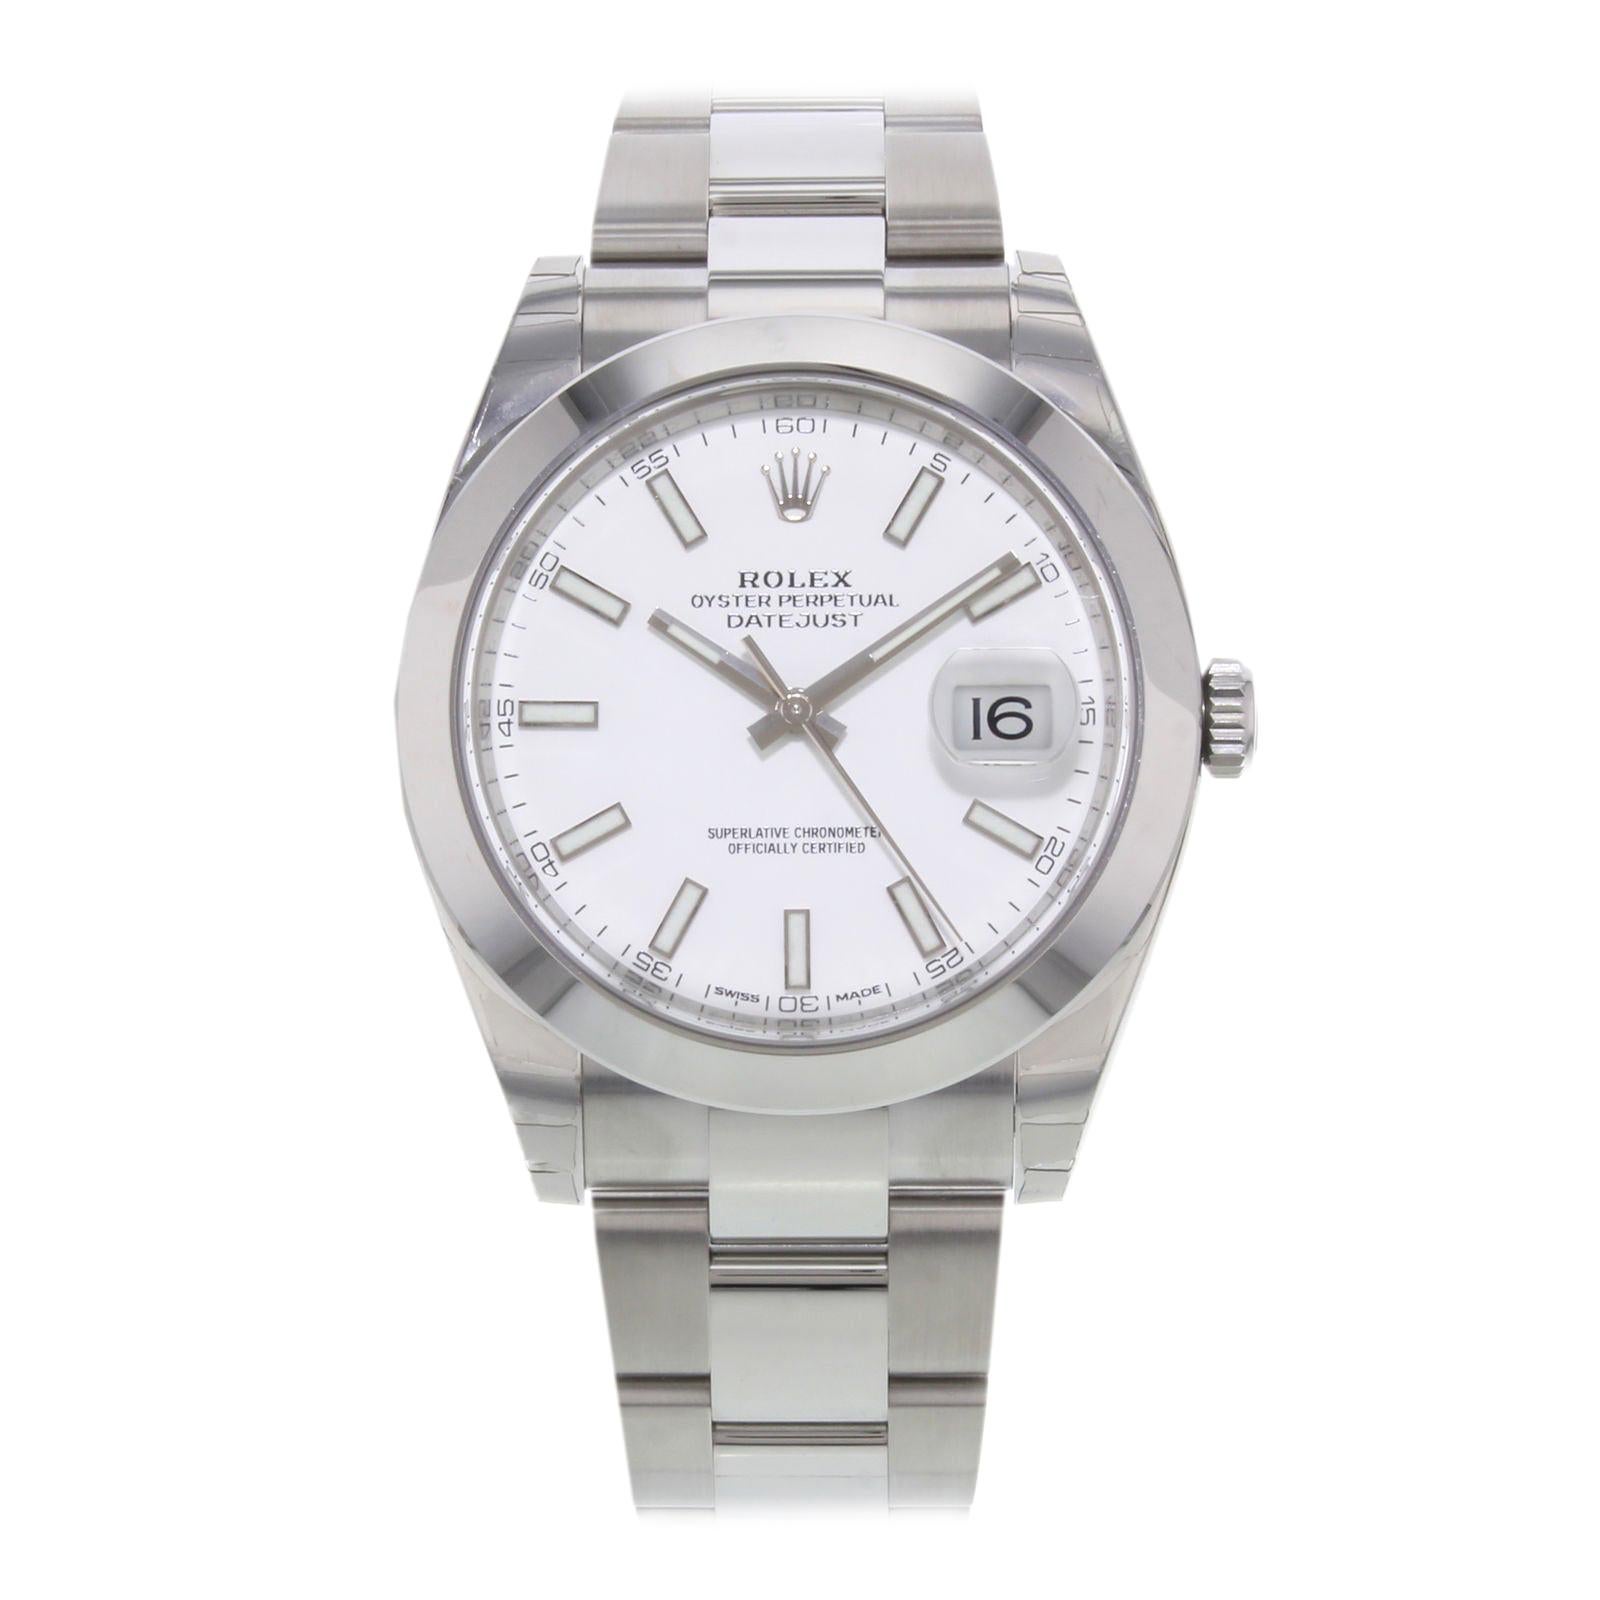 Rolex Datejust 41 126300 Wio White Index Dial Steel Automatic Men's Watch